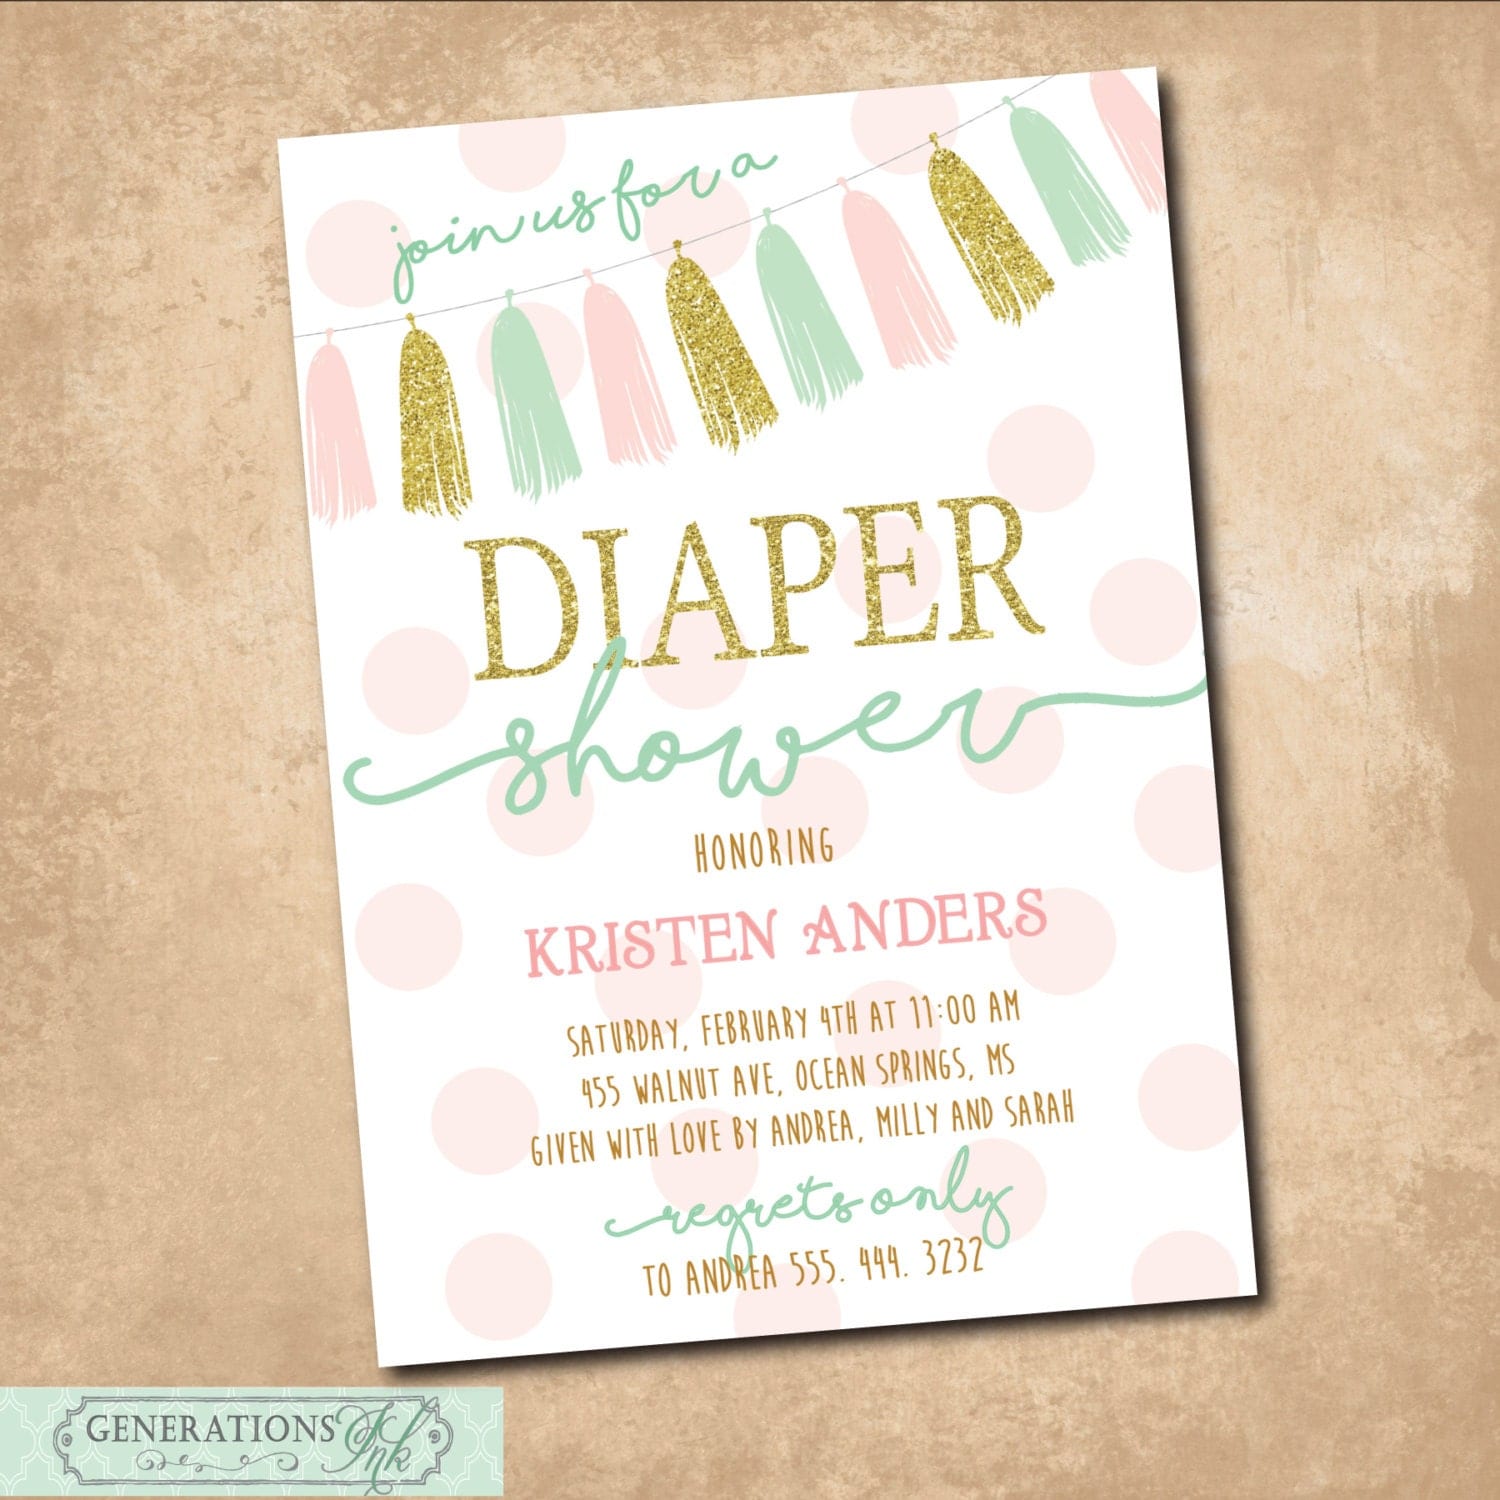 Diaper Shower Invitation/DIGITAL FILE/printable/wording can be